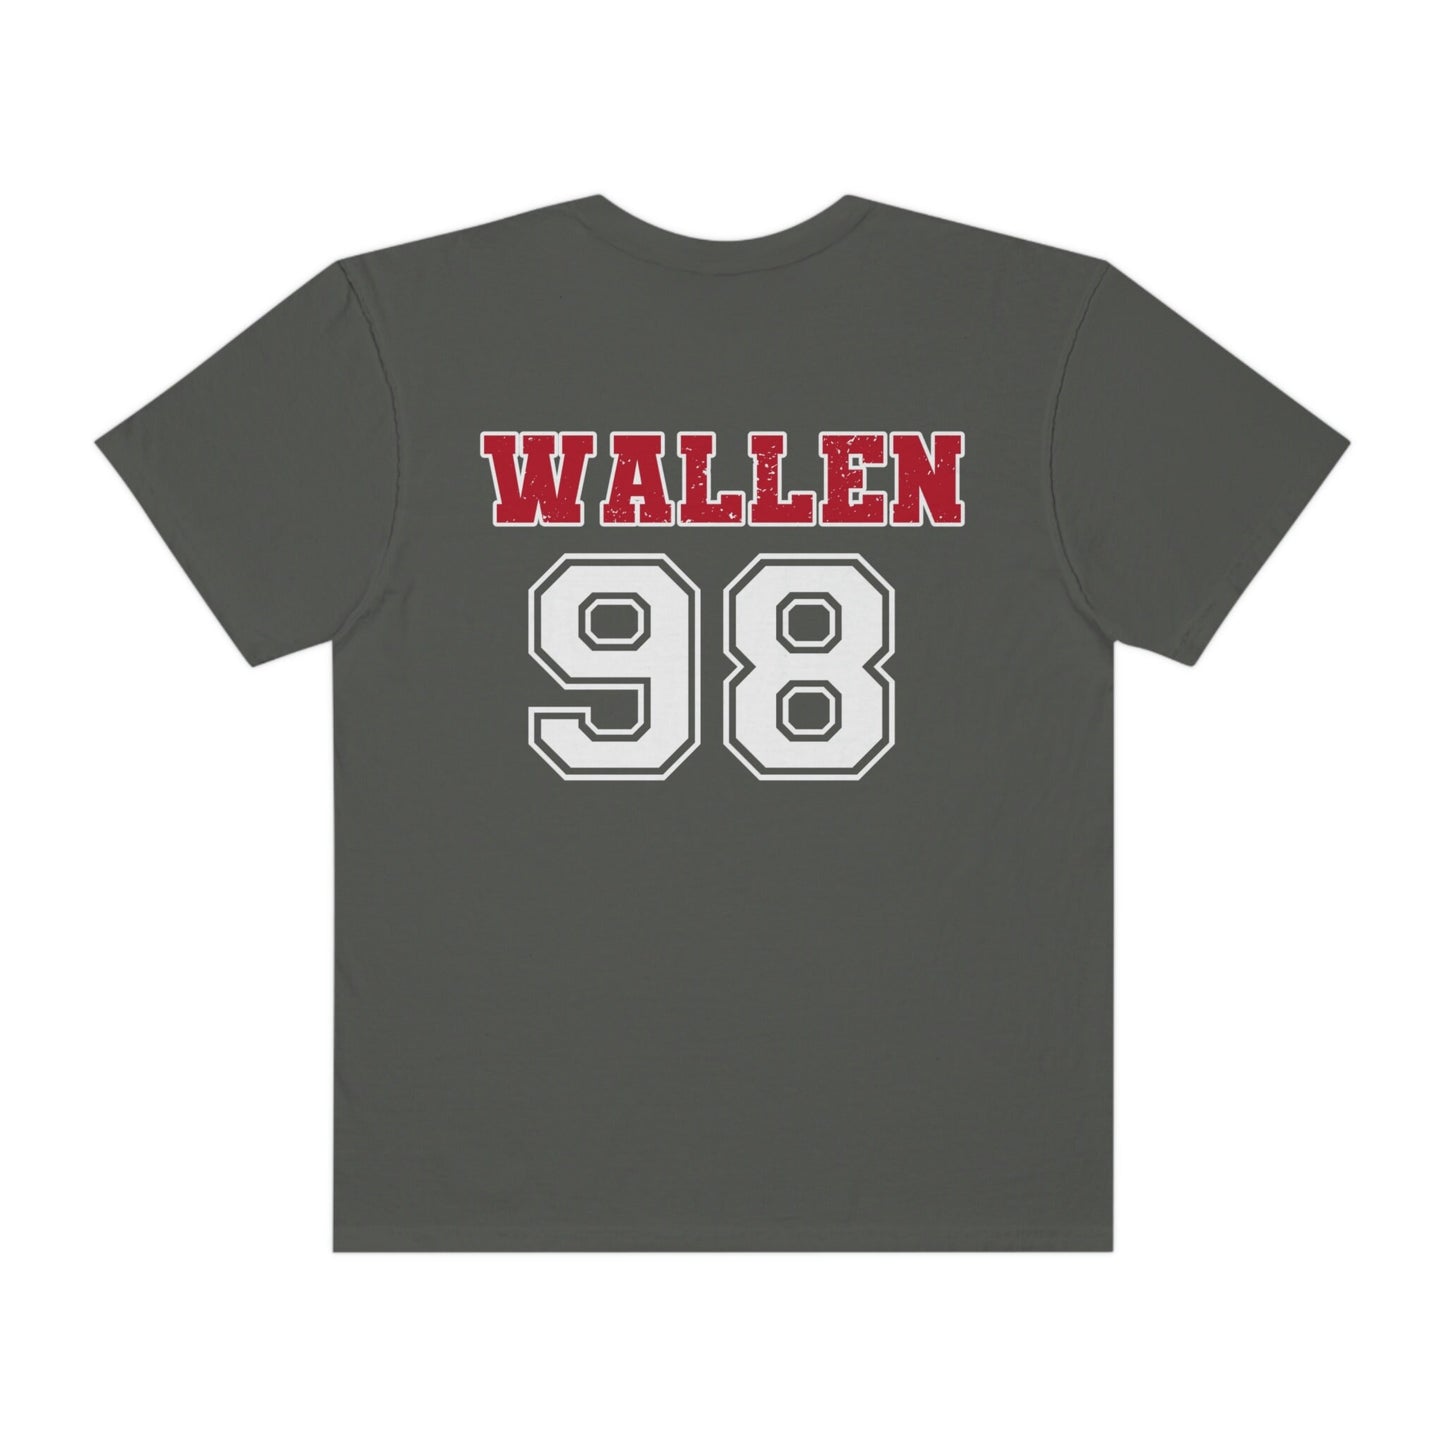 Wallen Shirt, 98 Braves, Wallen shirt for concert, Country music tee, Oversized tshirt dress, vintage western tee, cowboy Wallen